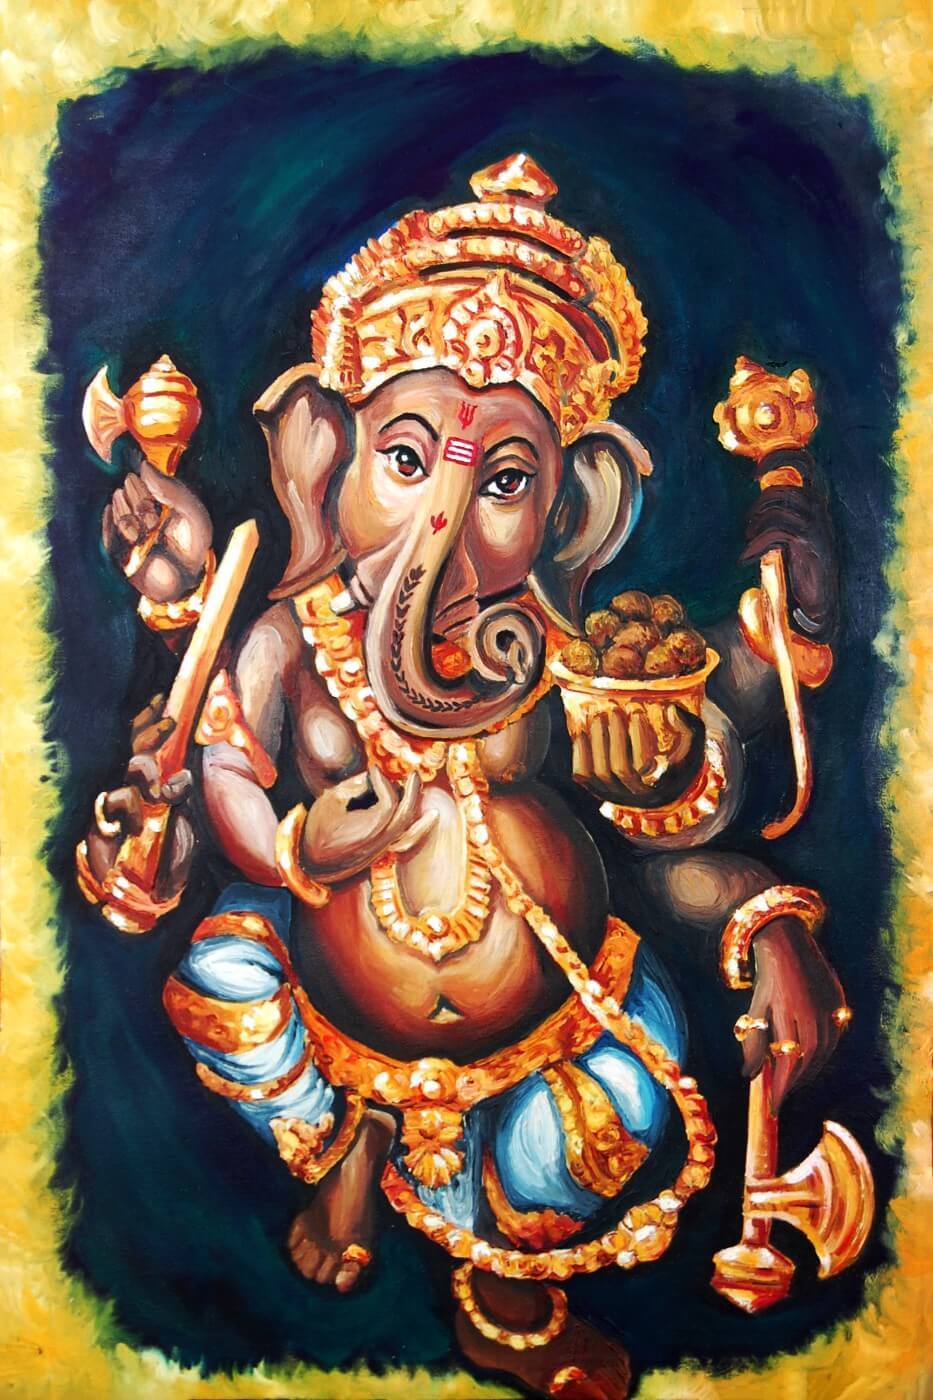 Dancing Ganesha Painting - Art Prints by Shoba Shetty | Buy ...